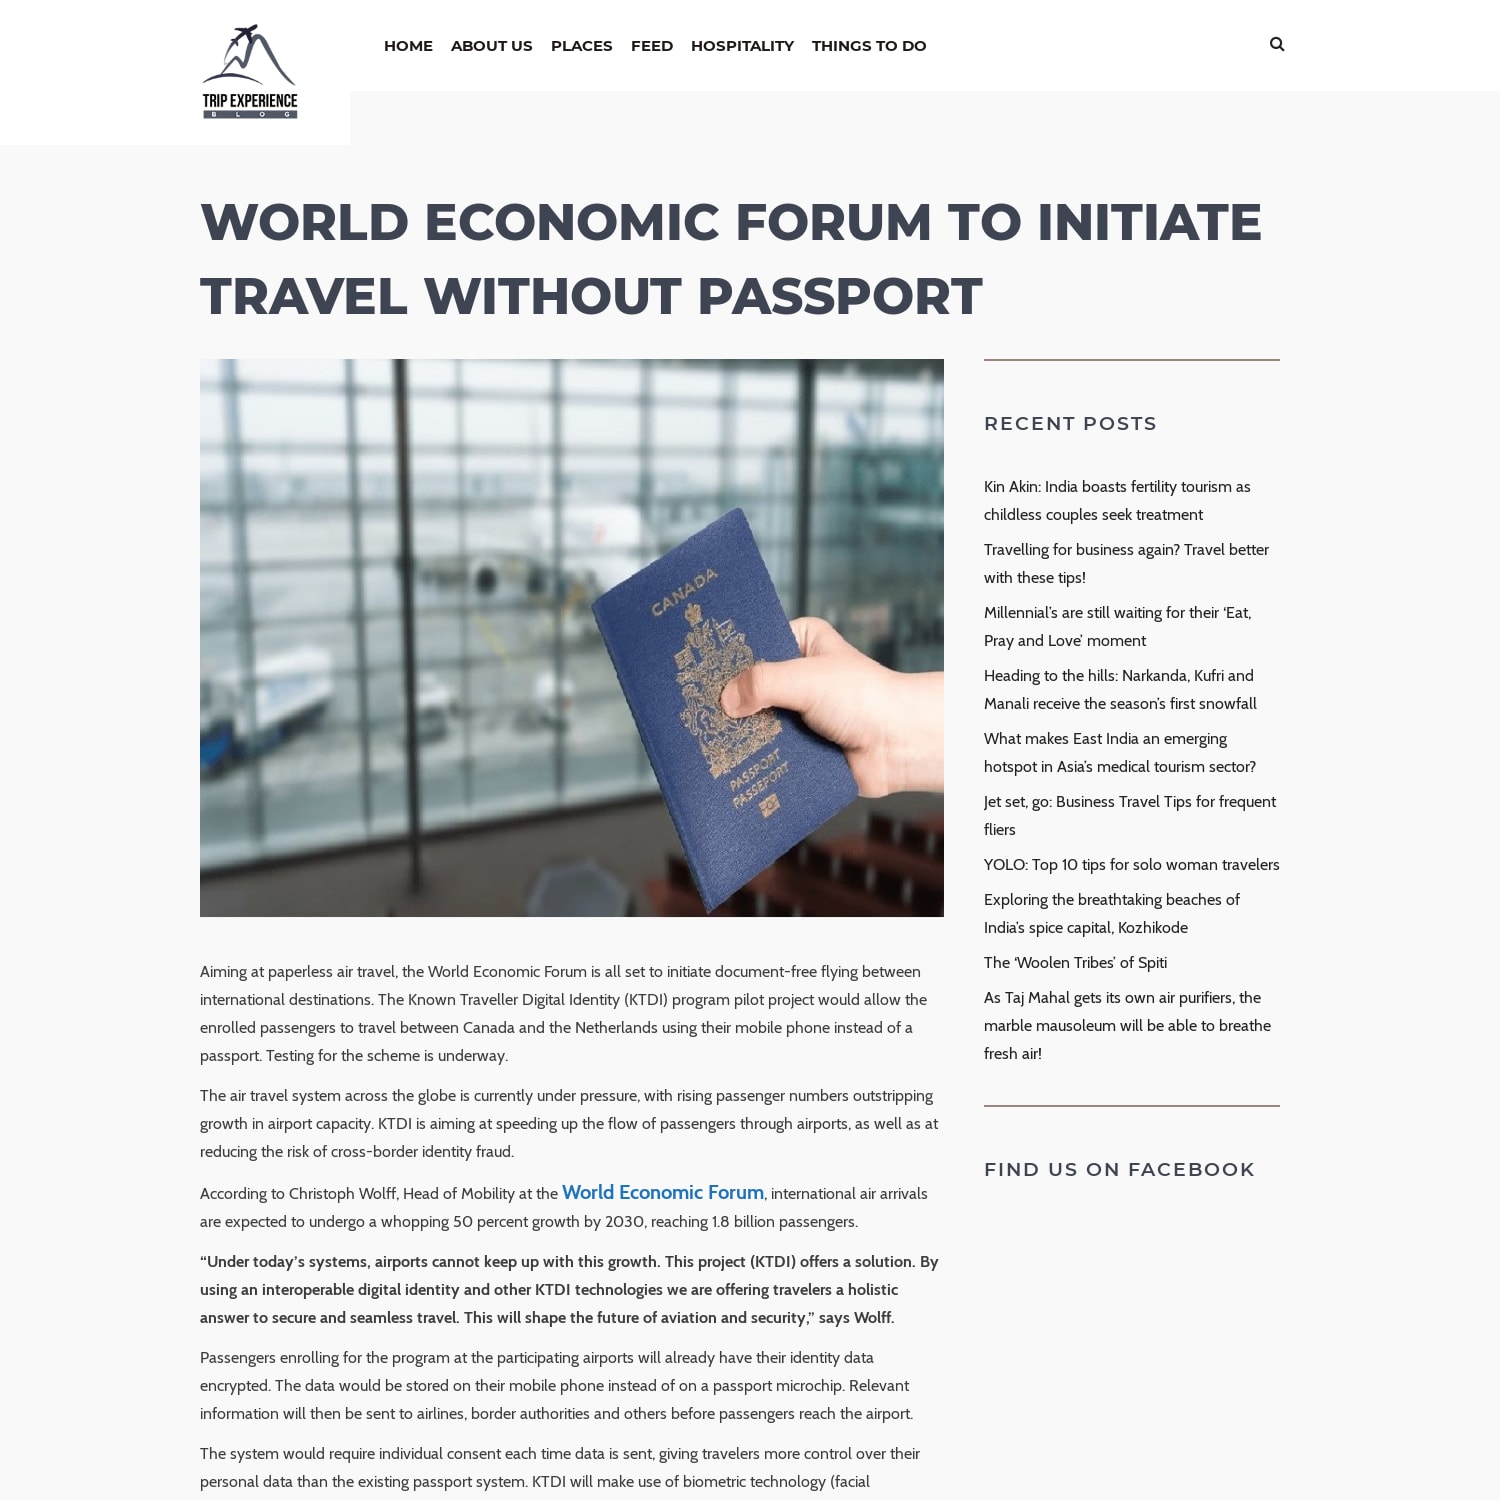 World Economic Forum to initiate travel without passport